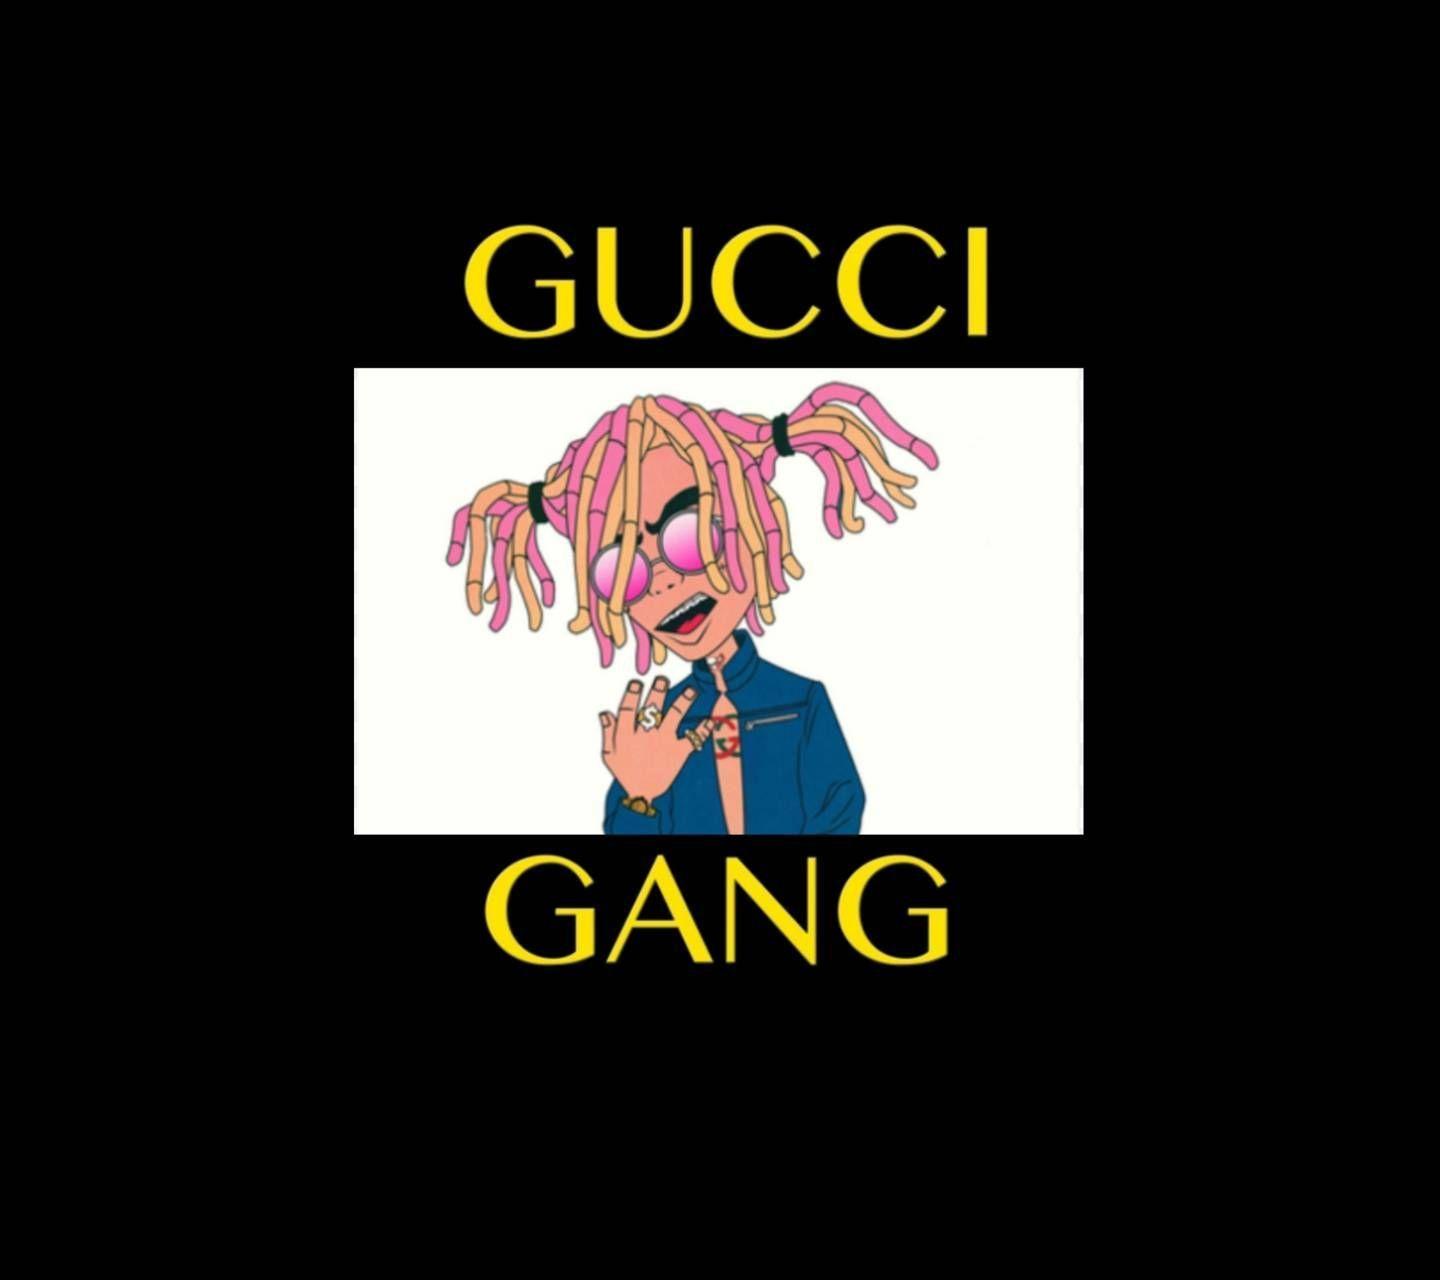 Gucci E Gang Cartoon Wallpaper Free Gucci E Gang